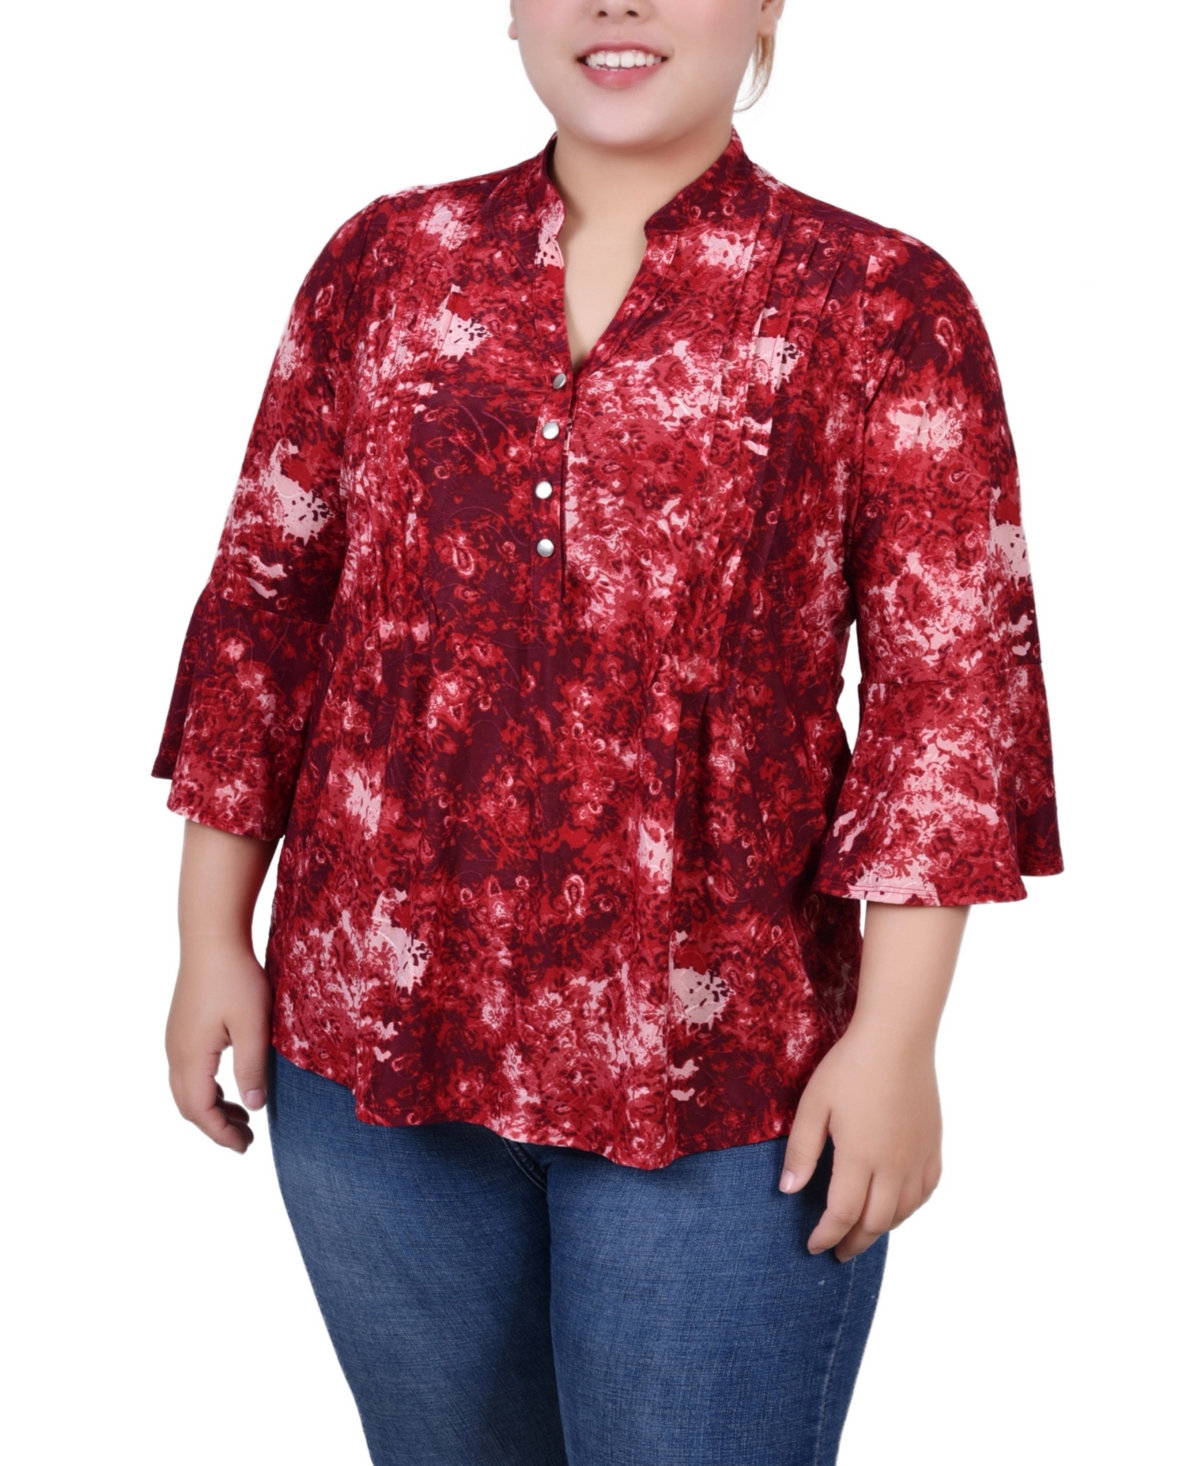 Split Sleeves Plus Size Blouse - RED WINE 3X